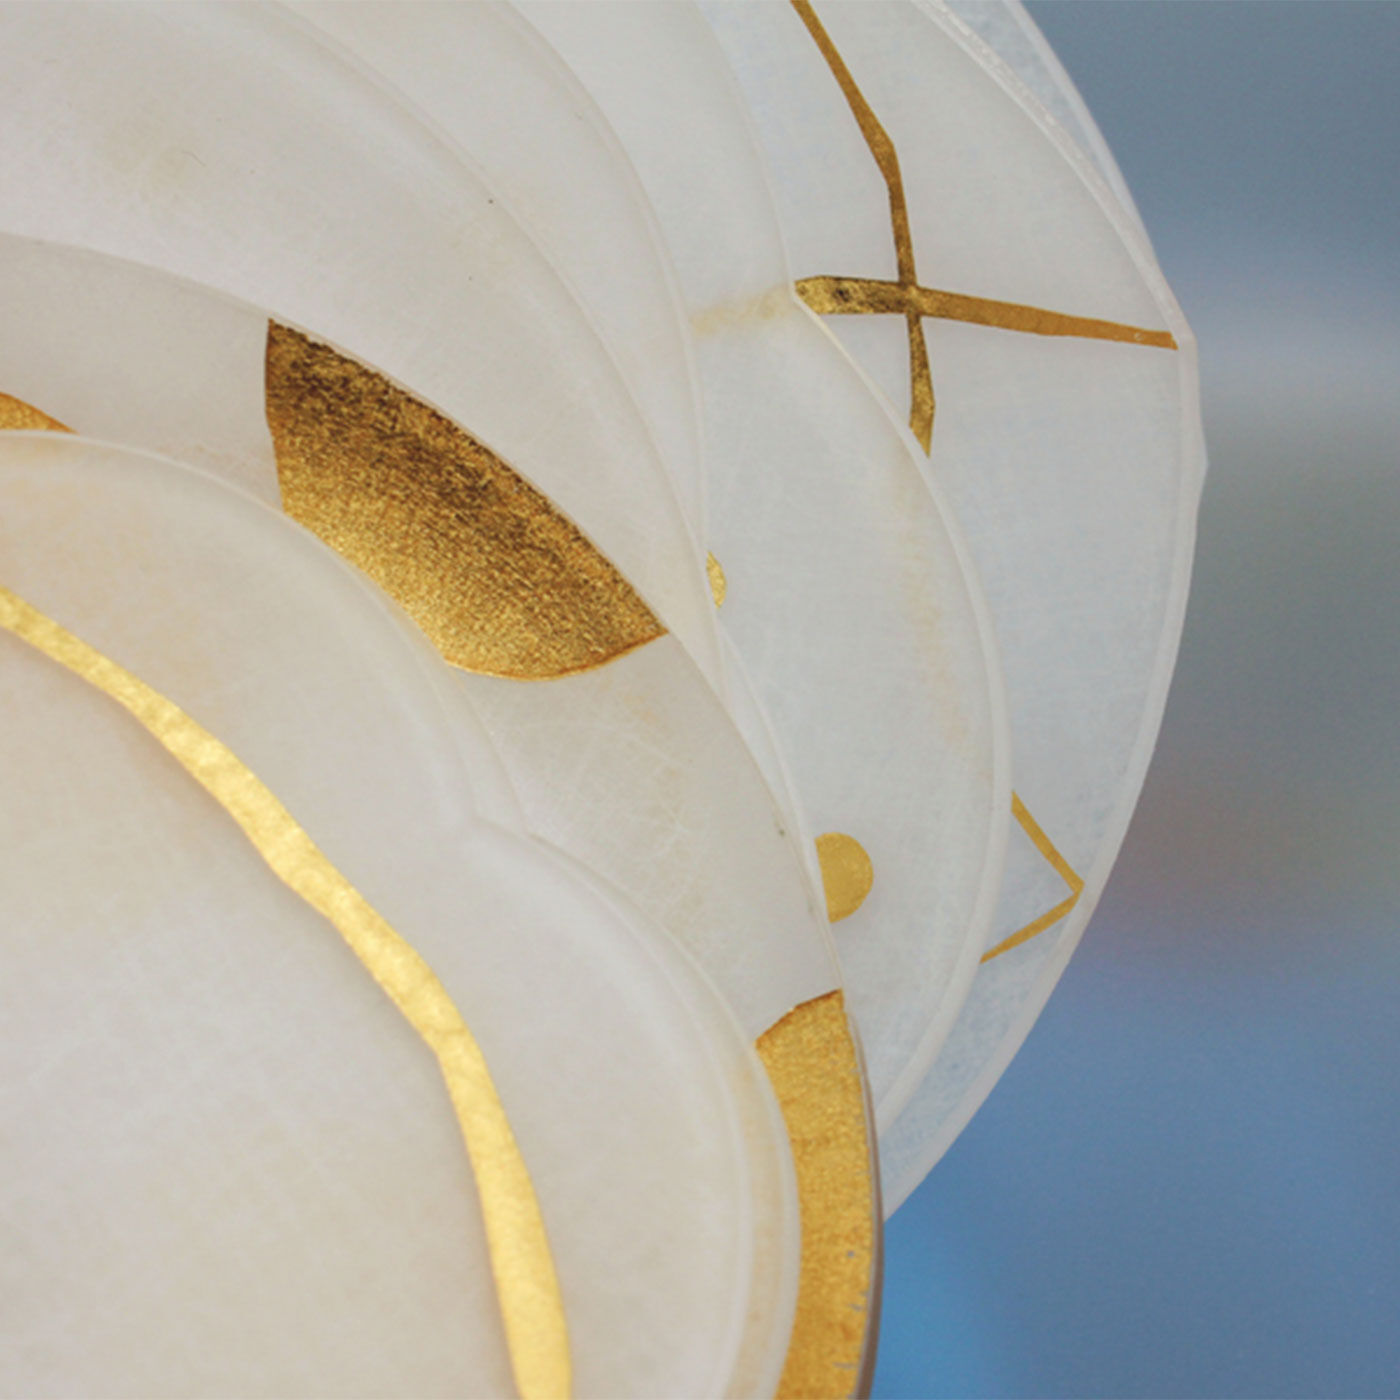 SeeMONO|マットな質感に金色の箔押しが映える木箱入り豆皿２枚セット|半透明の素材感と金箔のコントラストが上品。